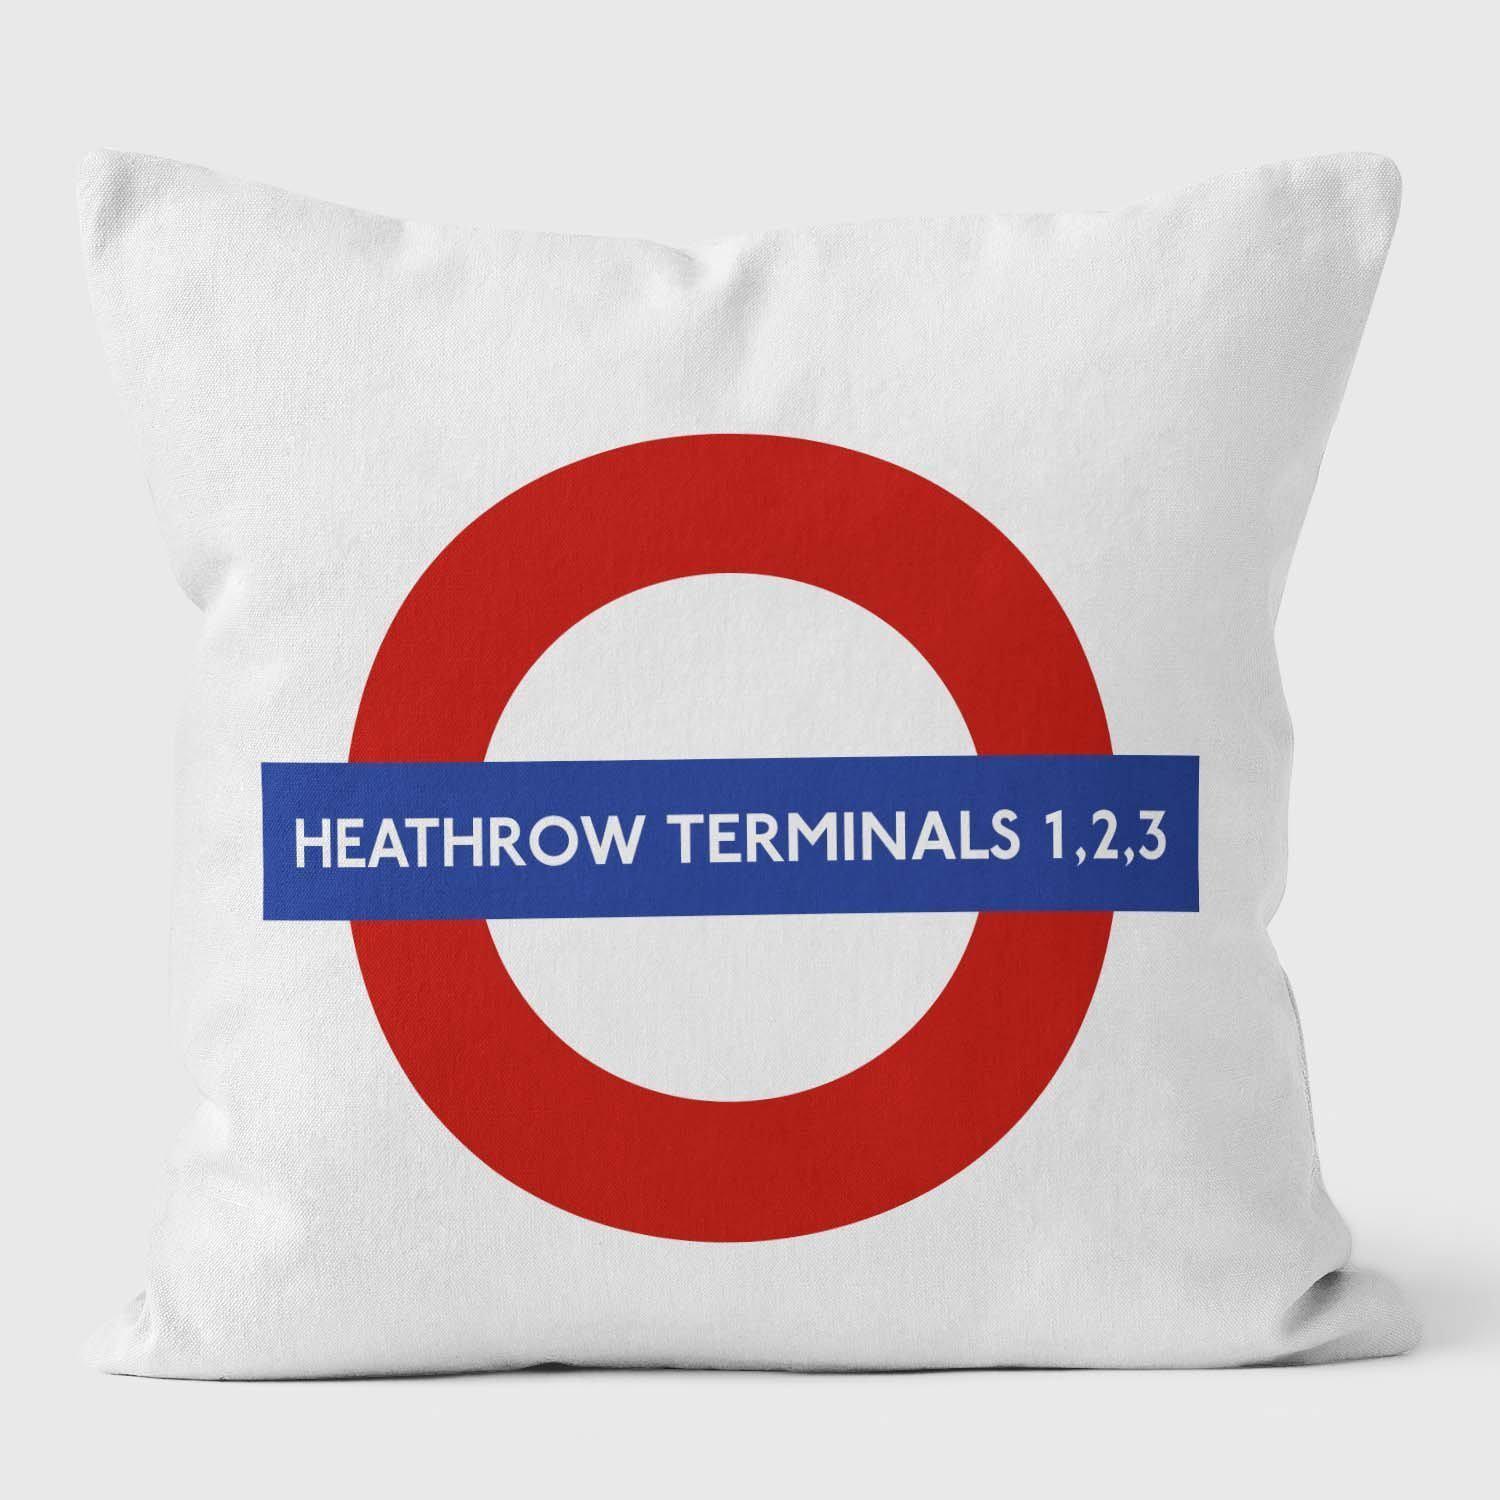 Heathrow Terminals 1 2 3 London Underground Tube Station Roundel Cushion - Handmade Cushions UK - WeLoveCushions